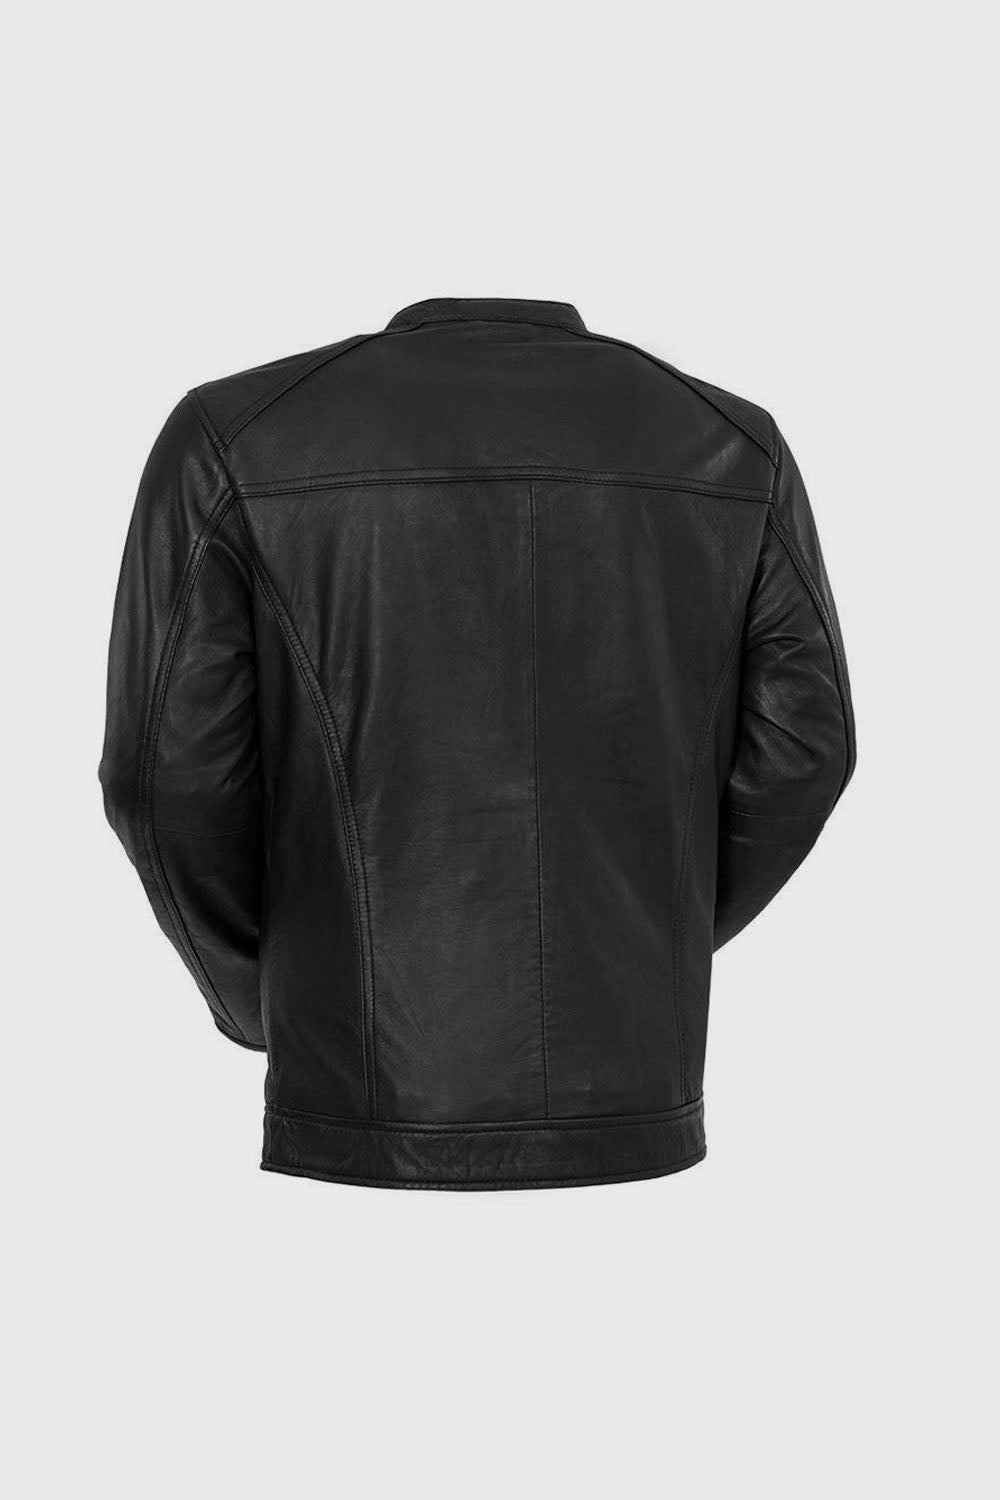 Iconoclast Mens Leather Jacket